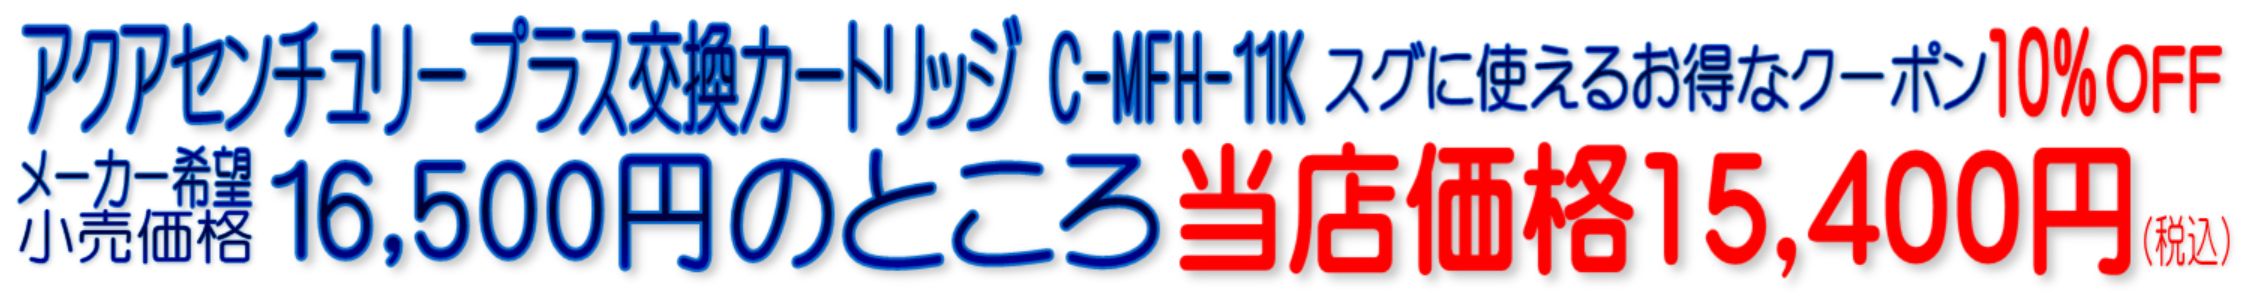 MFH-11K C-MFH-11K アクアセンチュリープラス